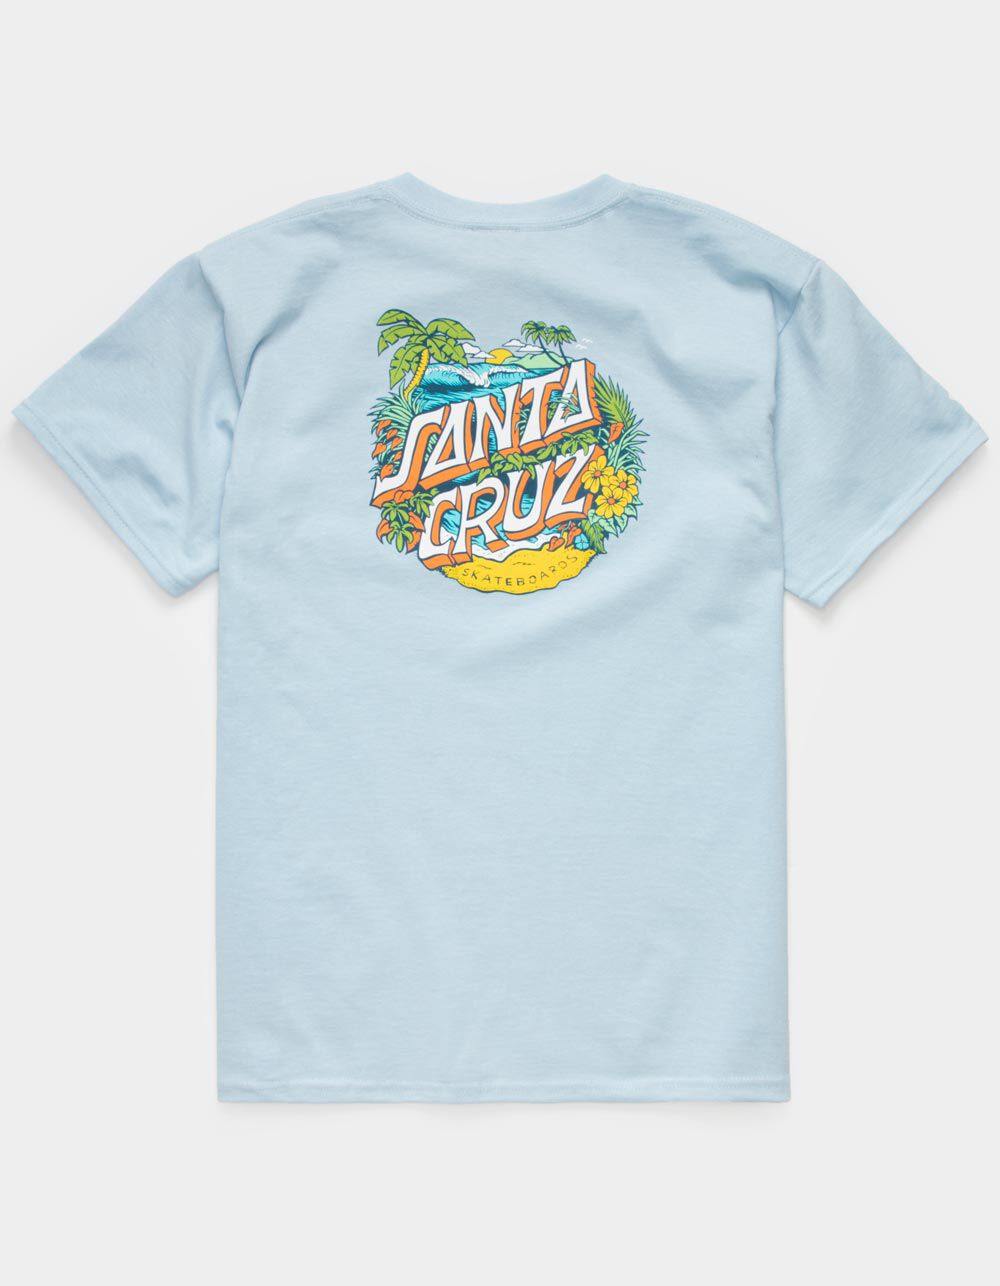 SANTA CRUZ Aloha Dot Boys Light Blue T-Shirt - LIGHT BLUE | Tillys